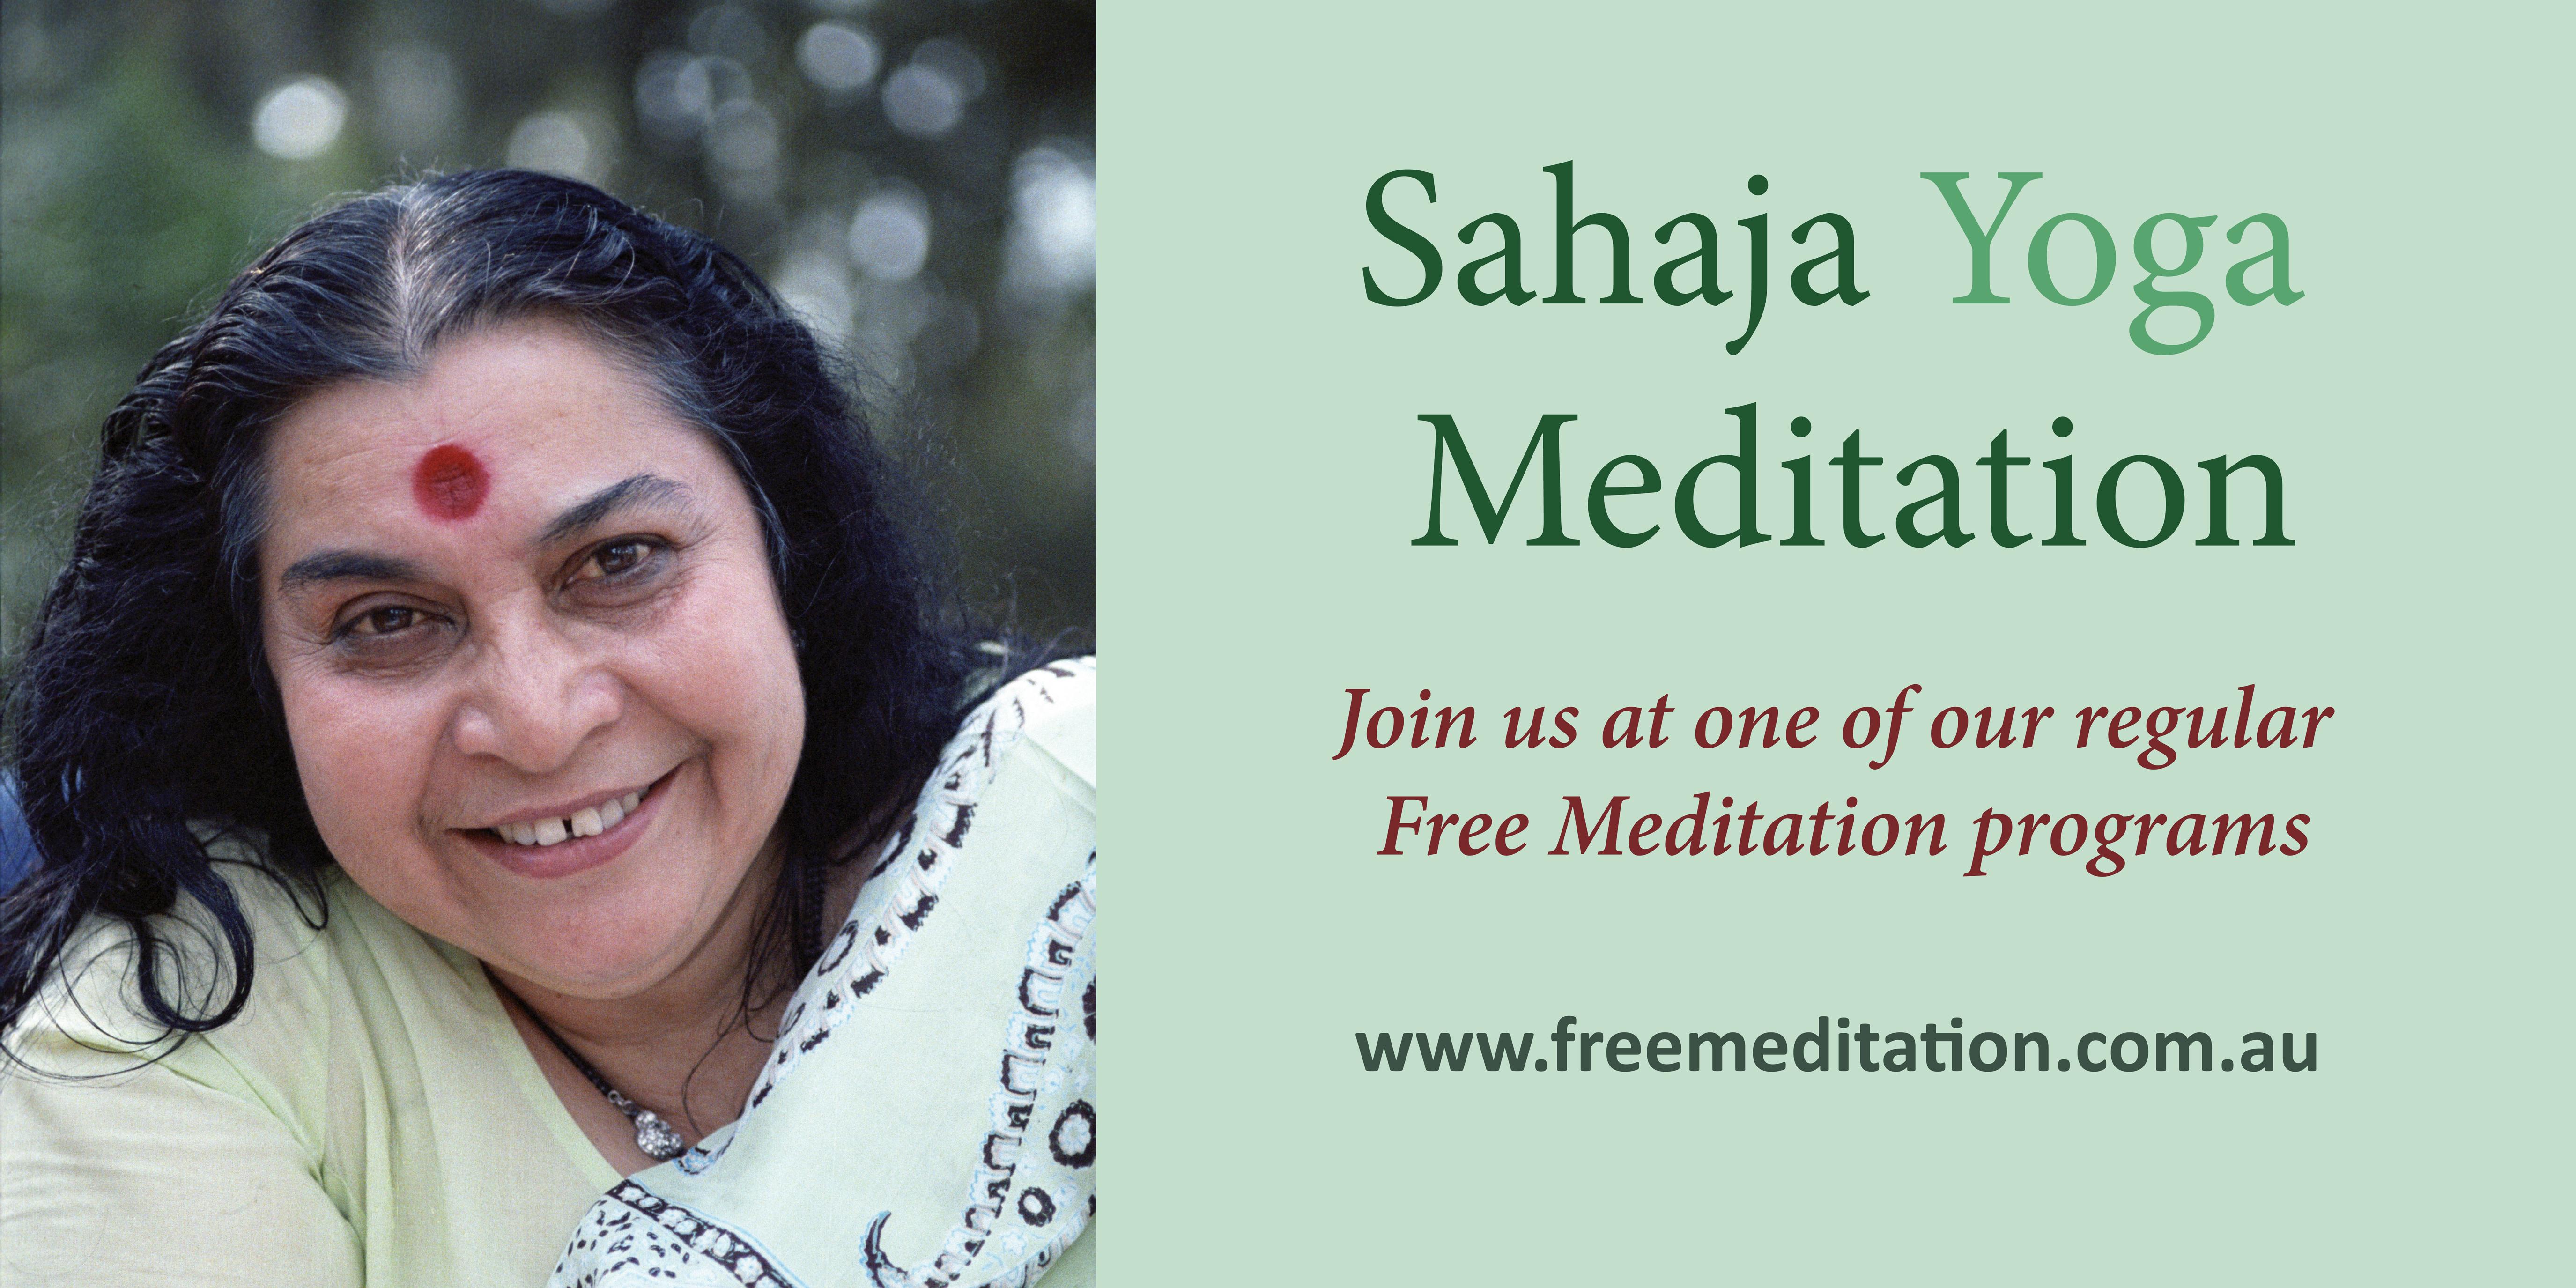 Free Meditation - Sahaja Yoga @ Tricolore Community Centre